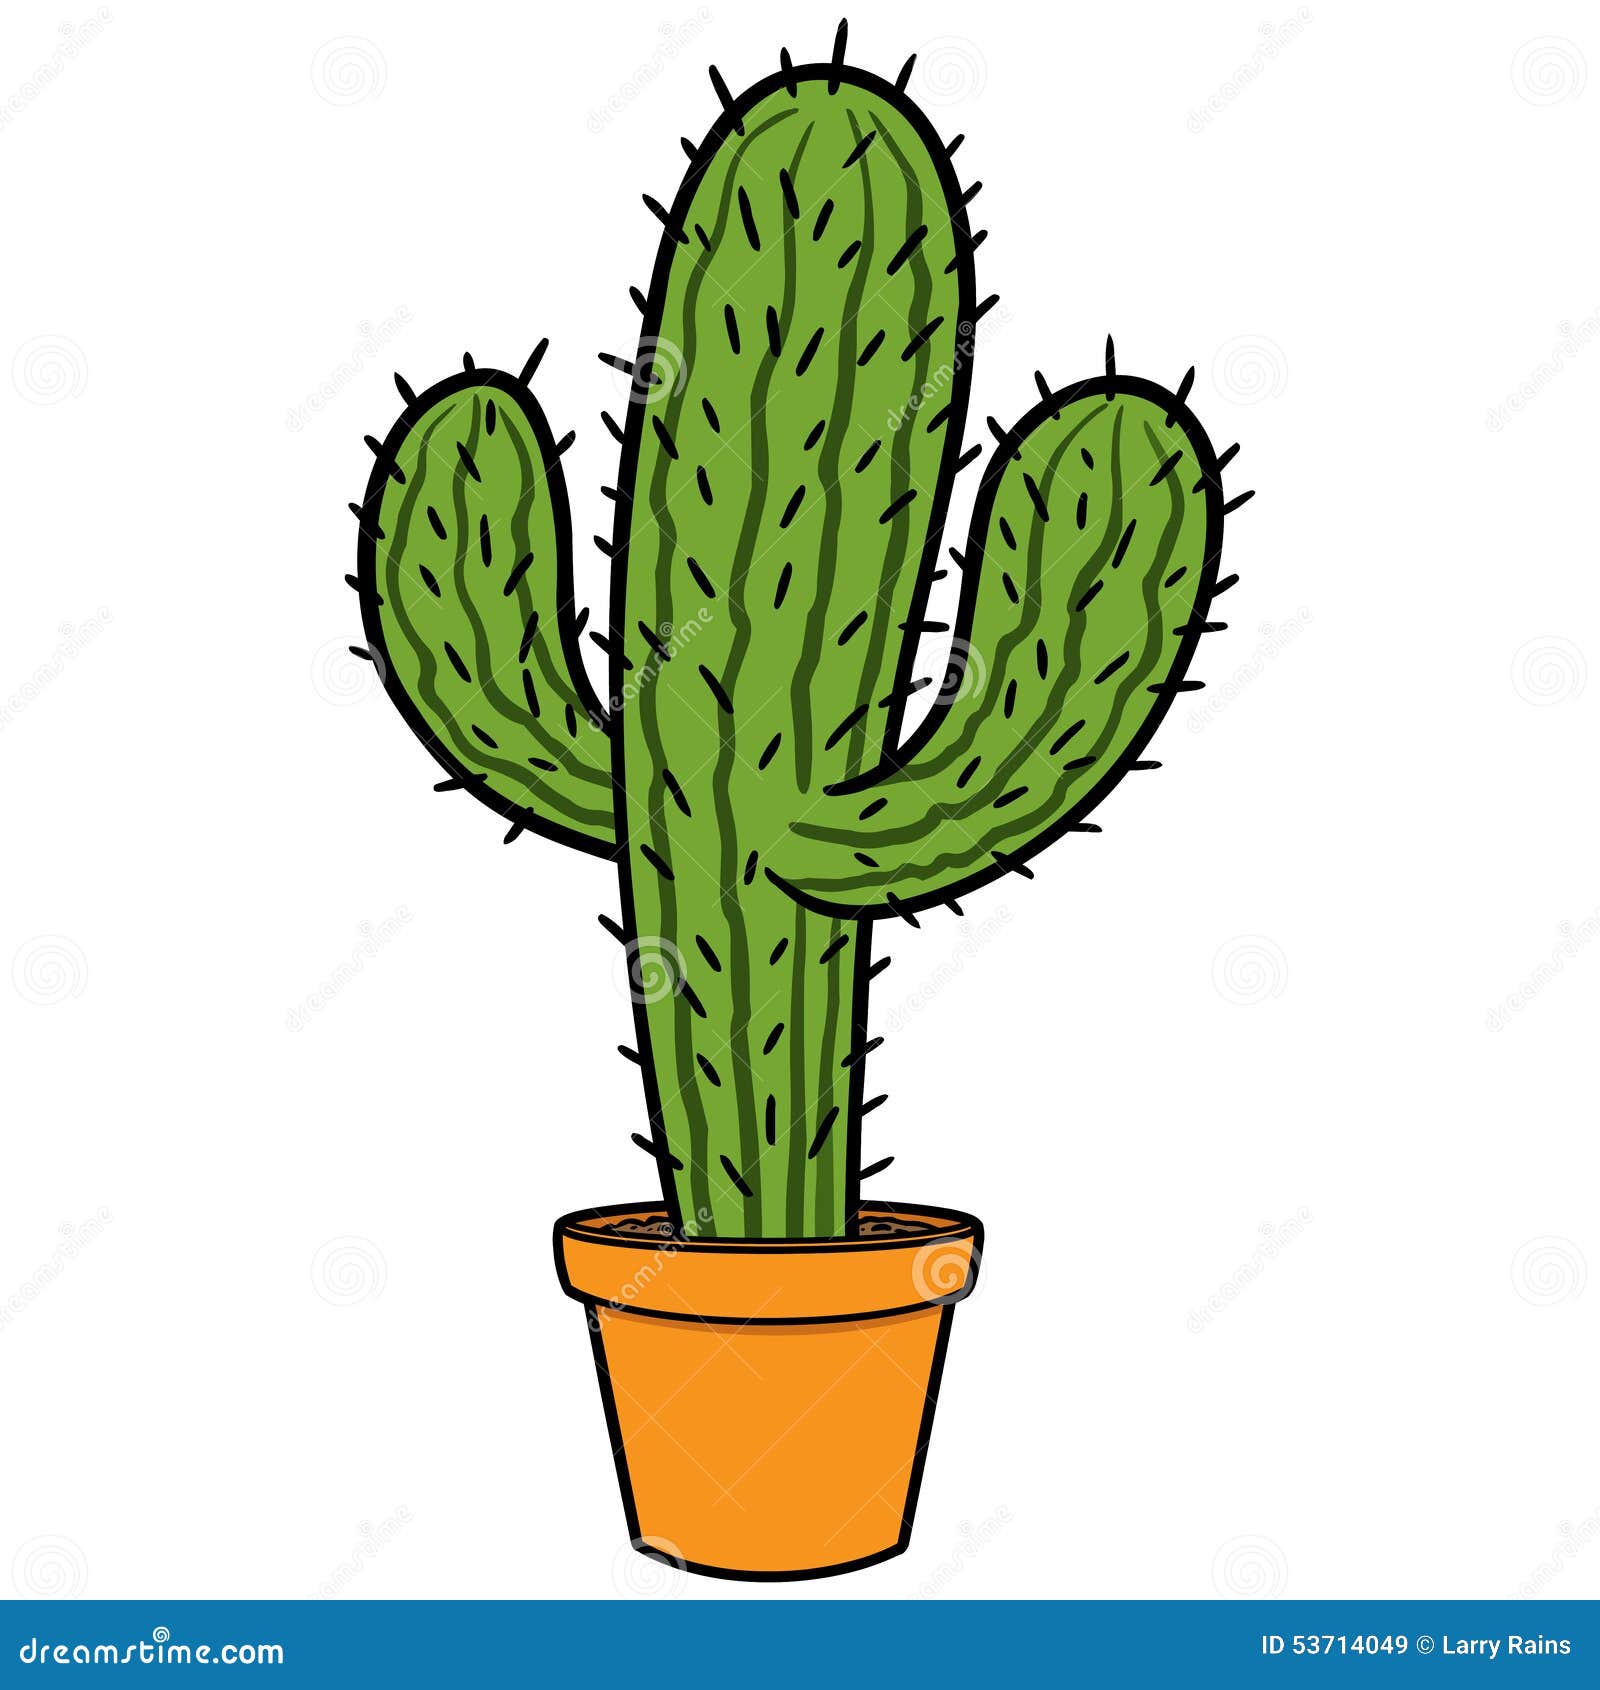 cactus tree and pot